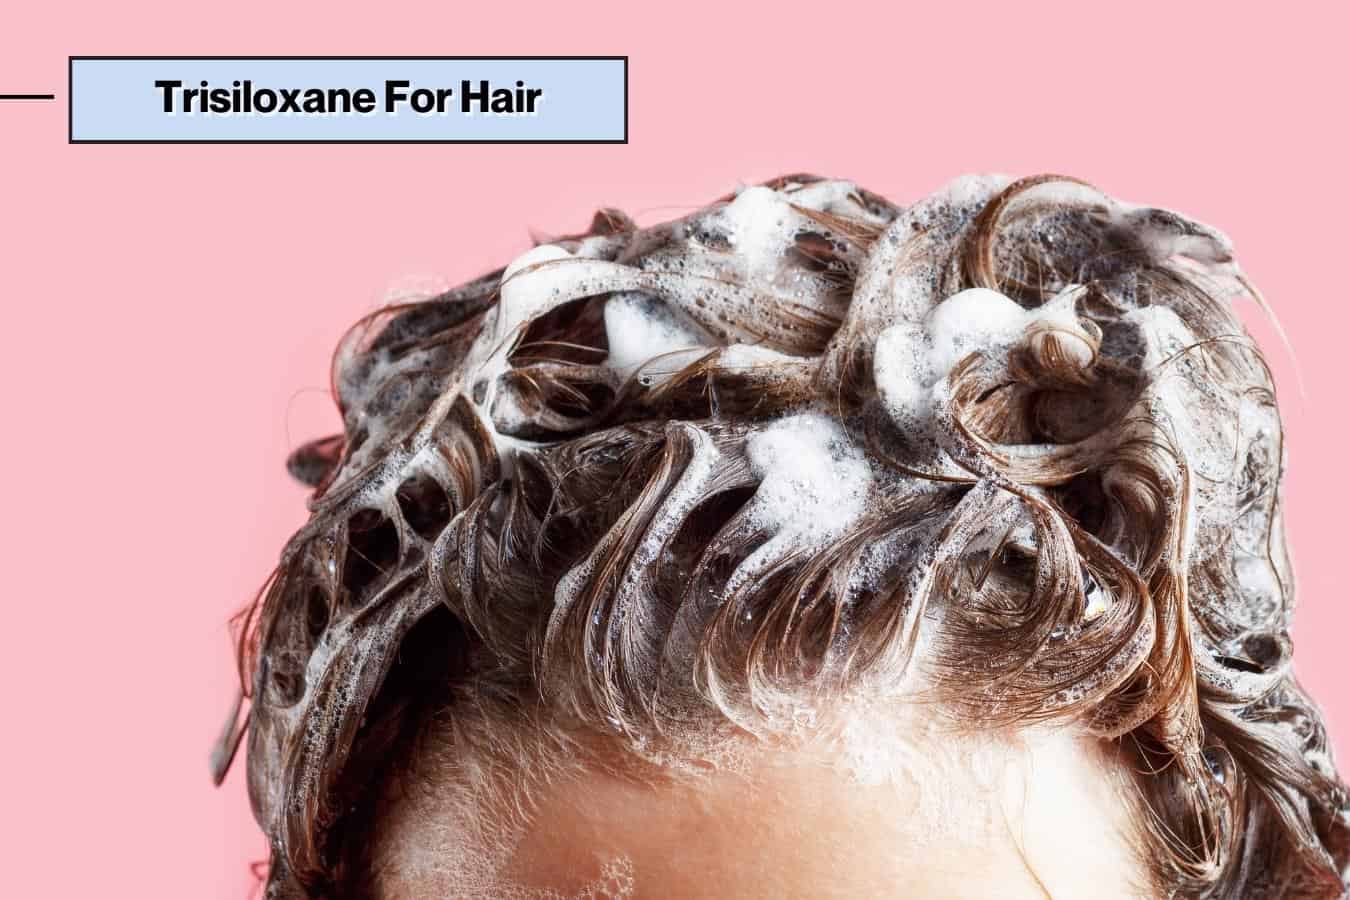 Trisiloxane For Hair